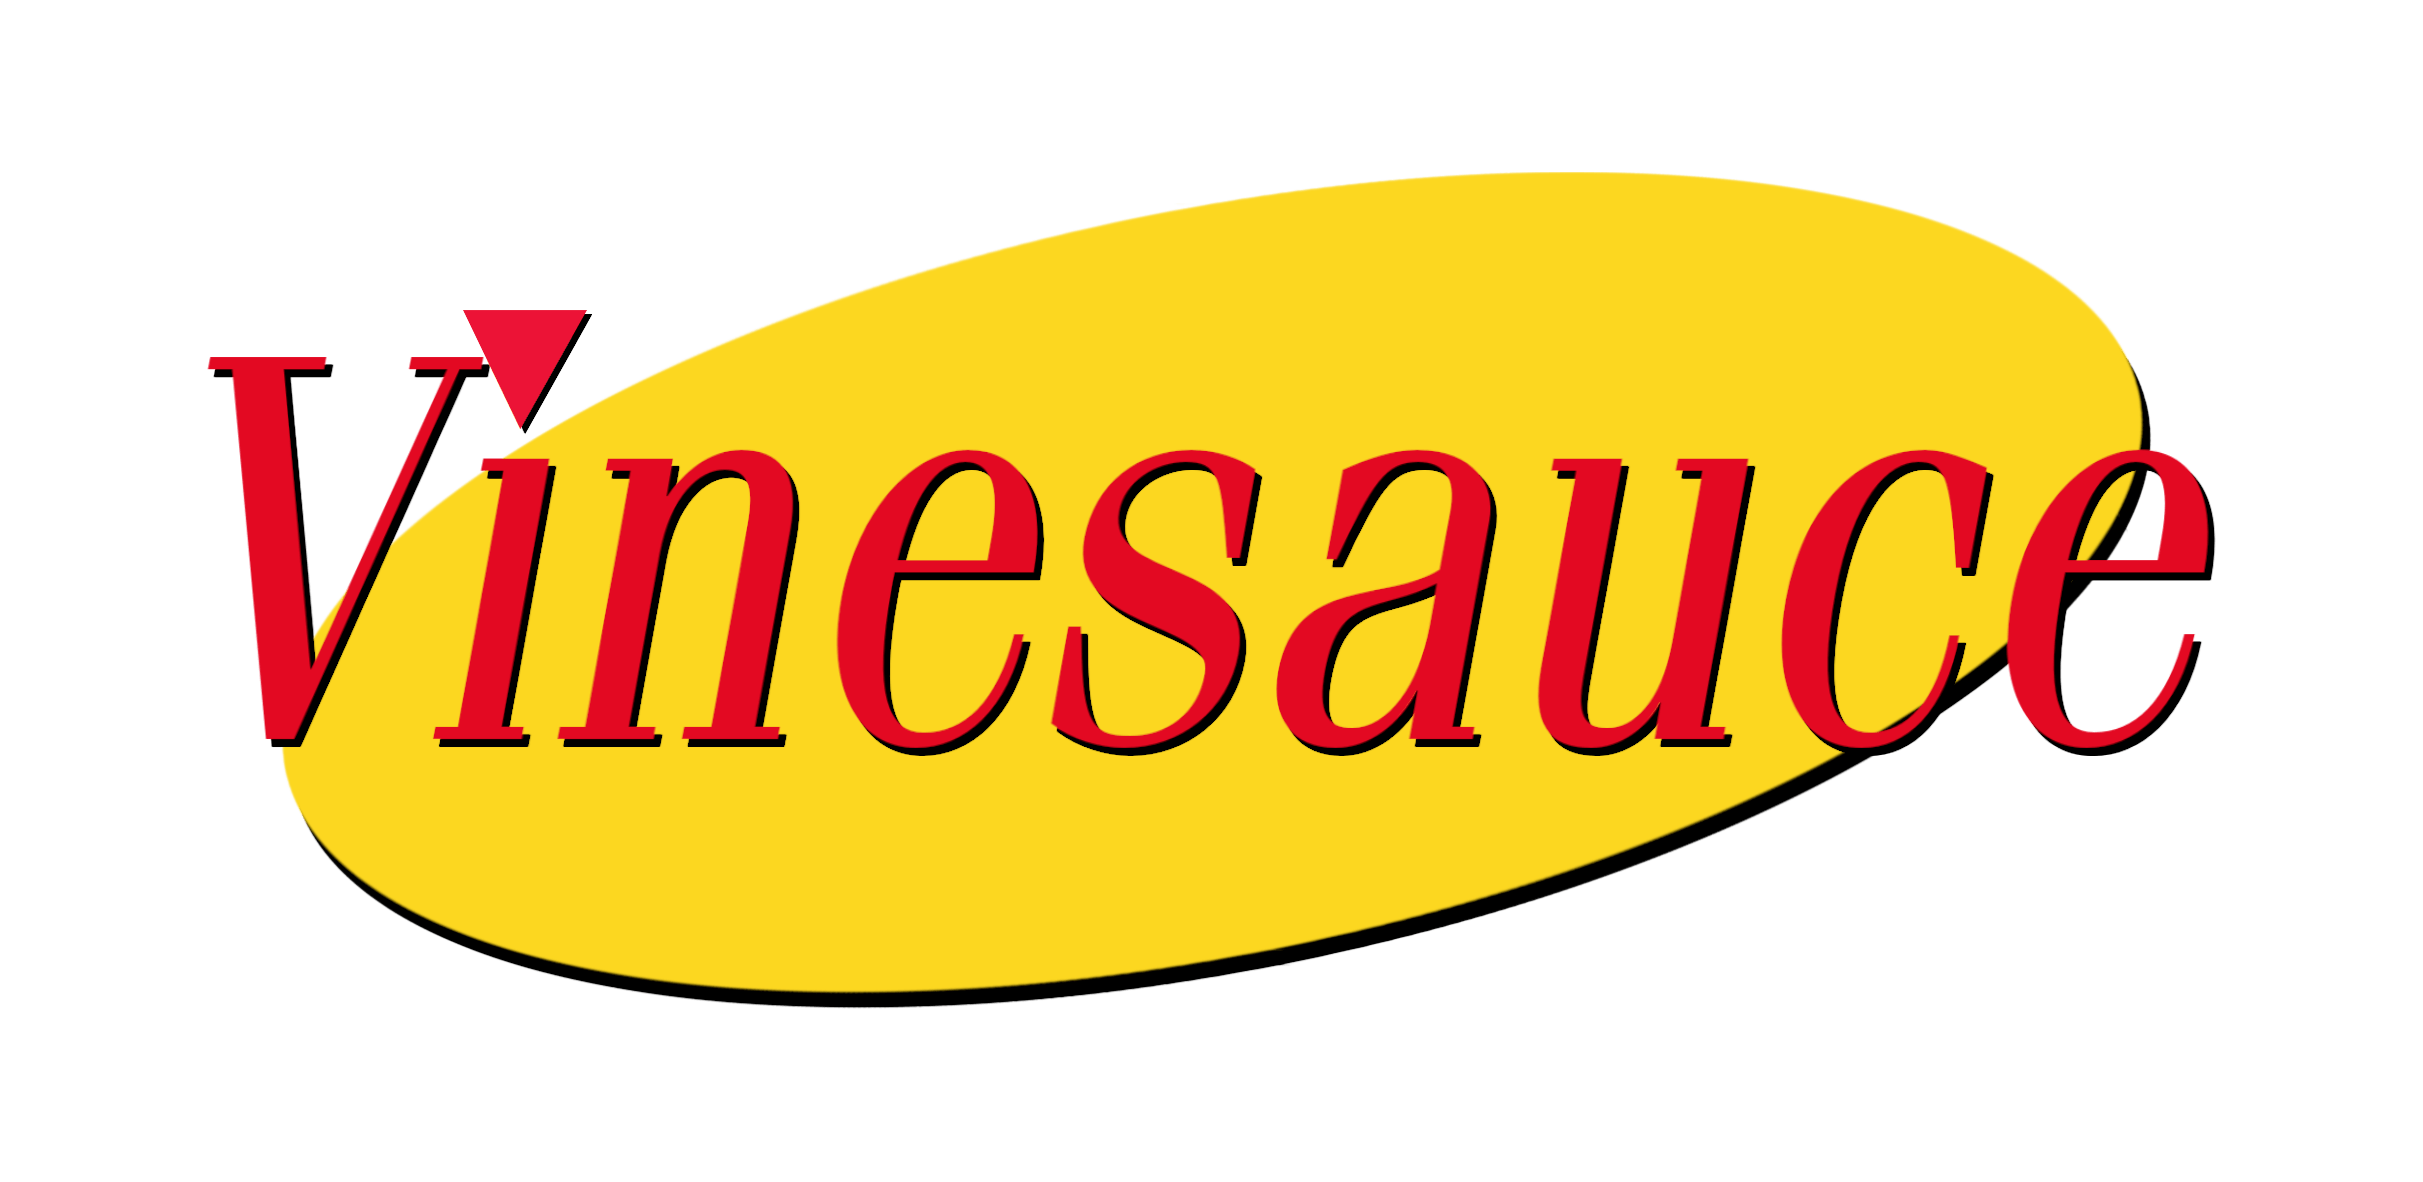 Seinfeld Logo - Vinesauce but it is a Seinfeld logo : Vinesauce